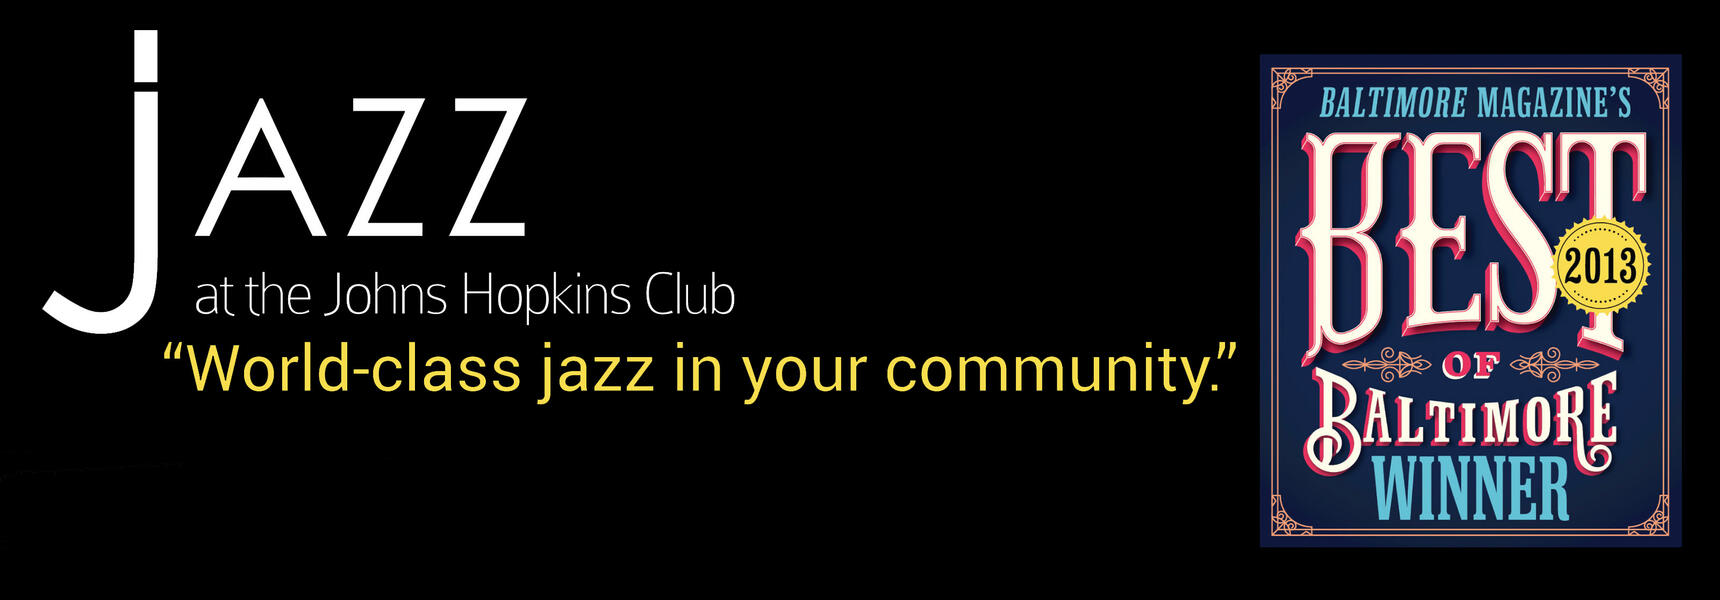 Jazz at the Johns Hopkins Club